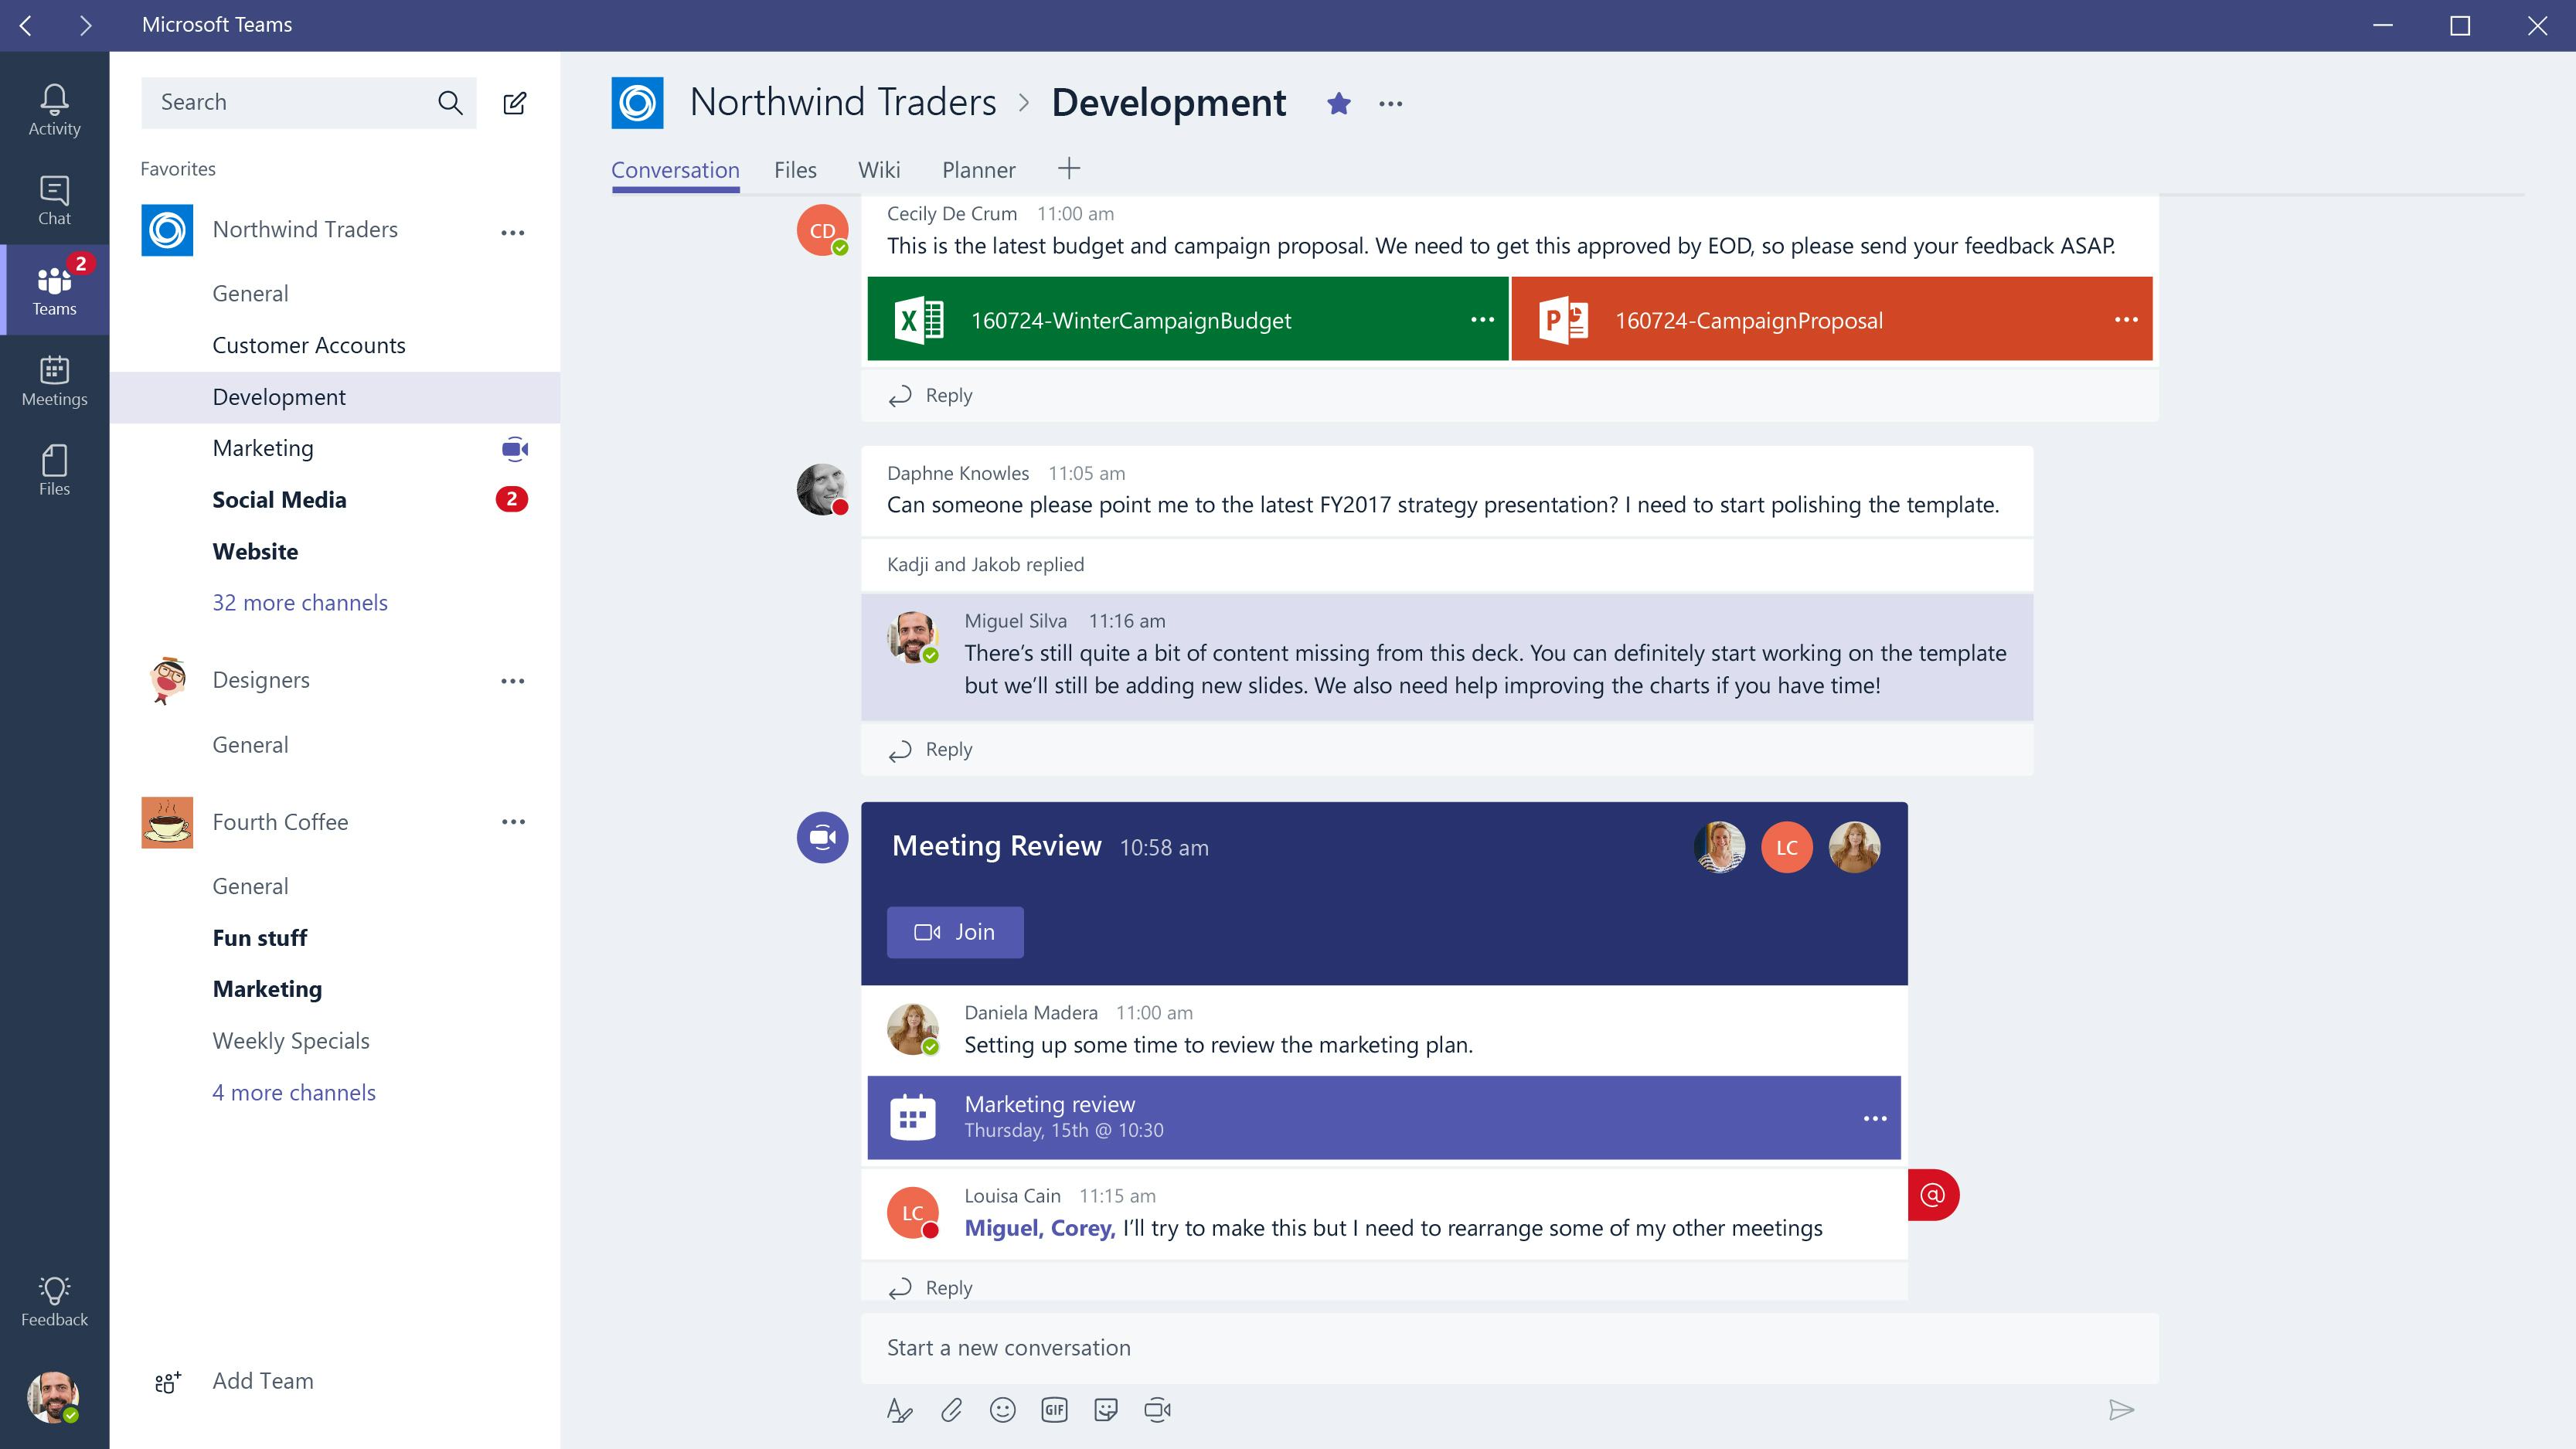 Microsoft Teams Software 2021 Reviews, Pricing & Demo